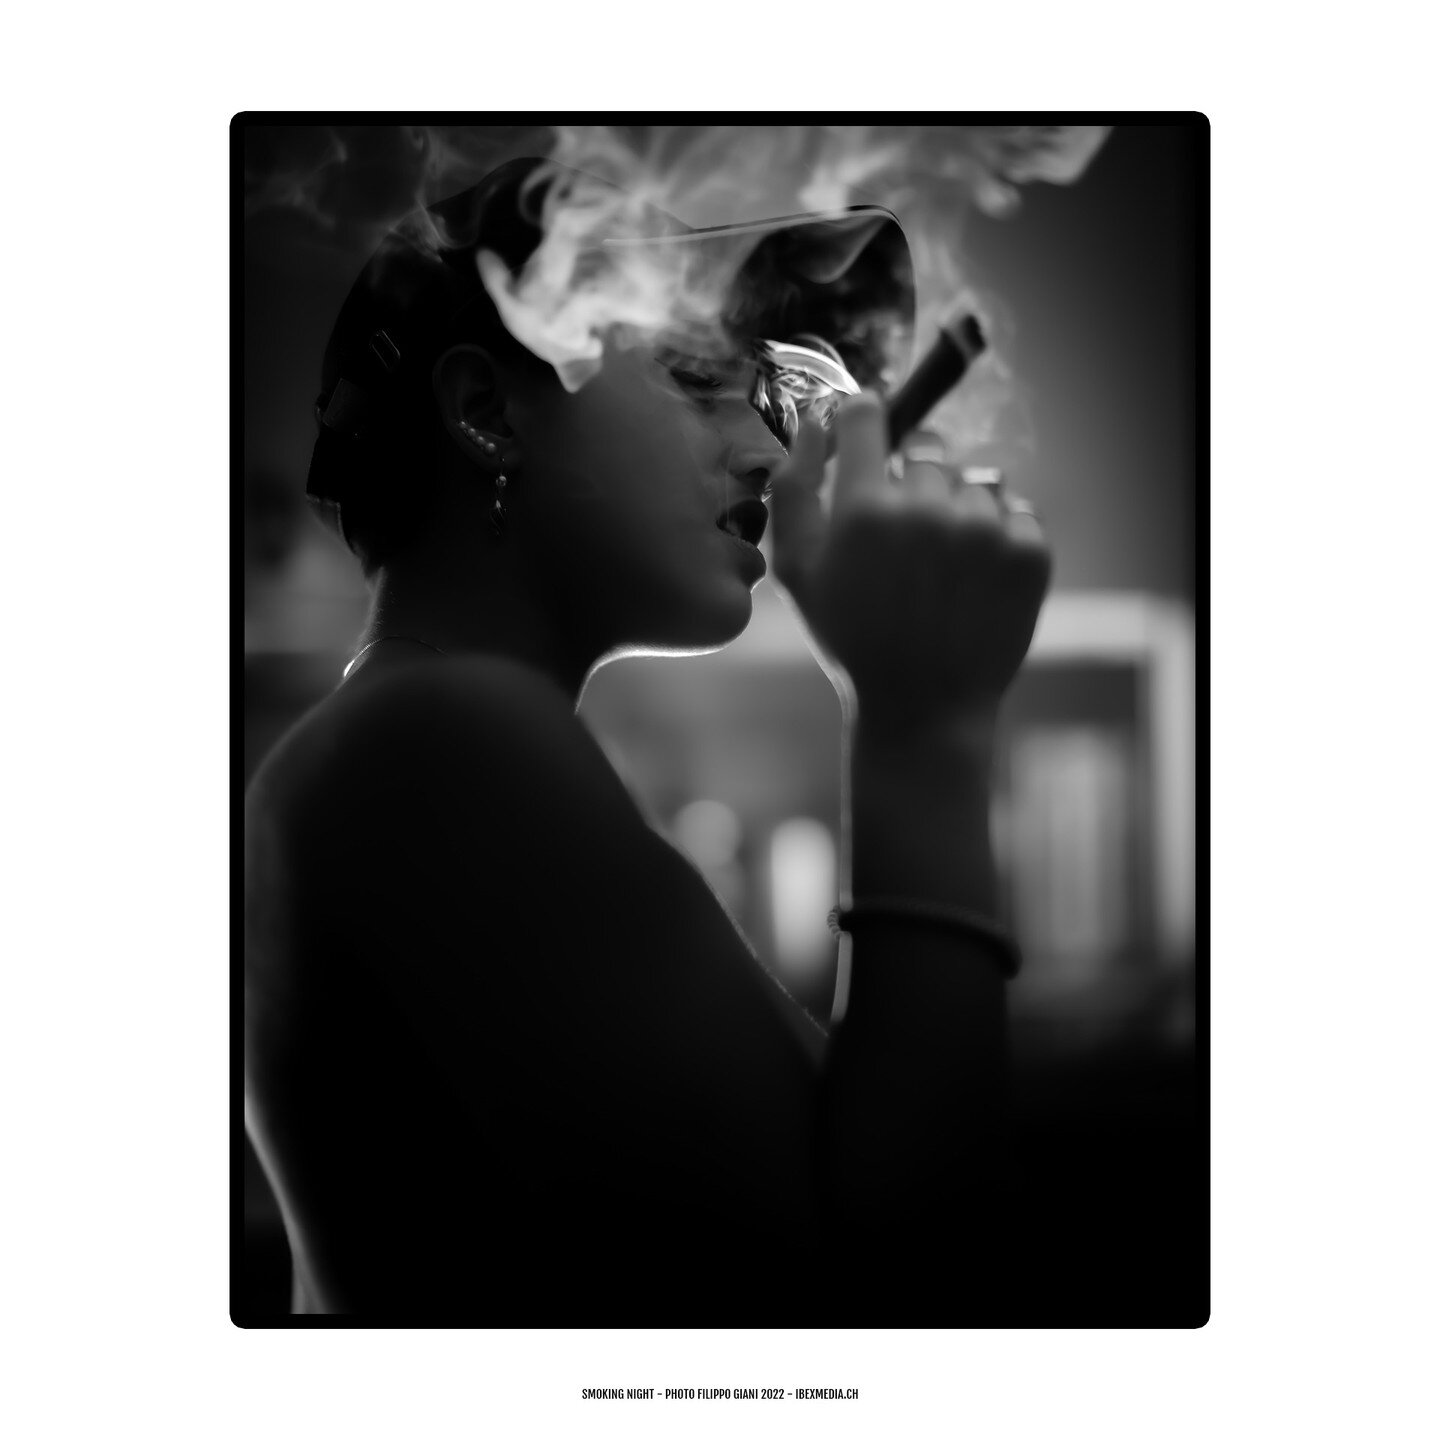 SMOKING NIGHT - #portrait #whiteandblack #cigar #smoke #night #jewelry #backlight #lowlight